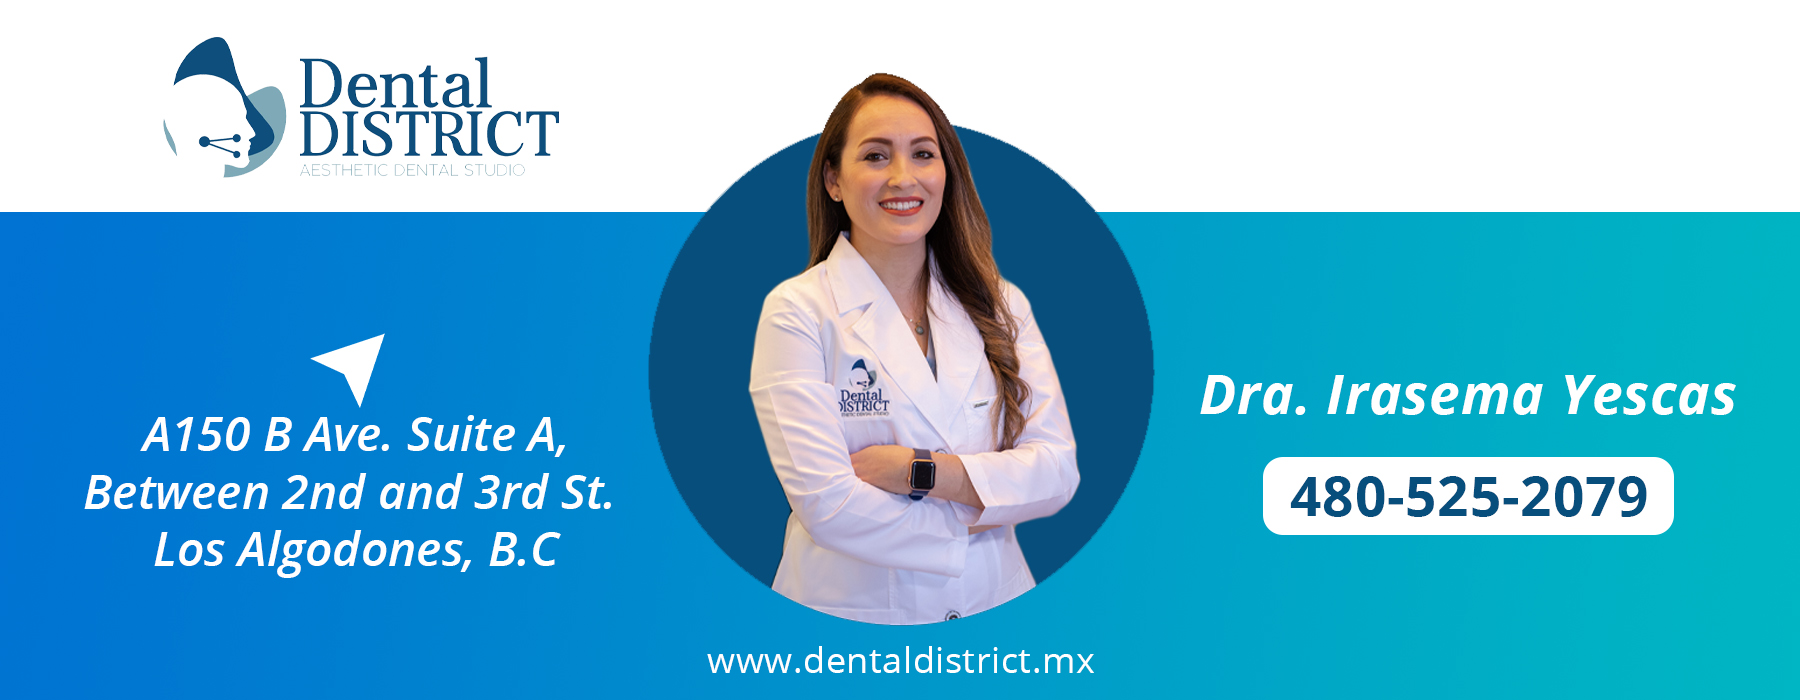  Dental District